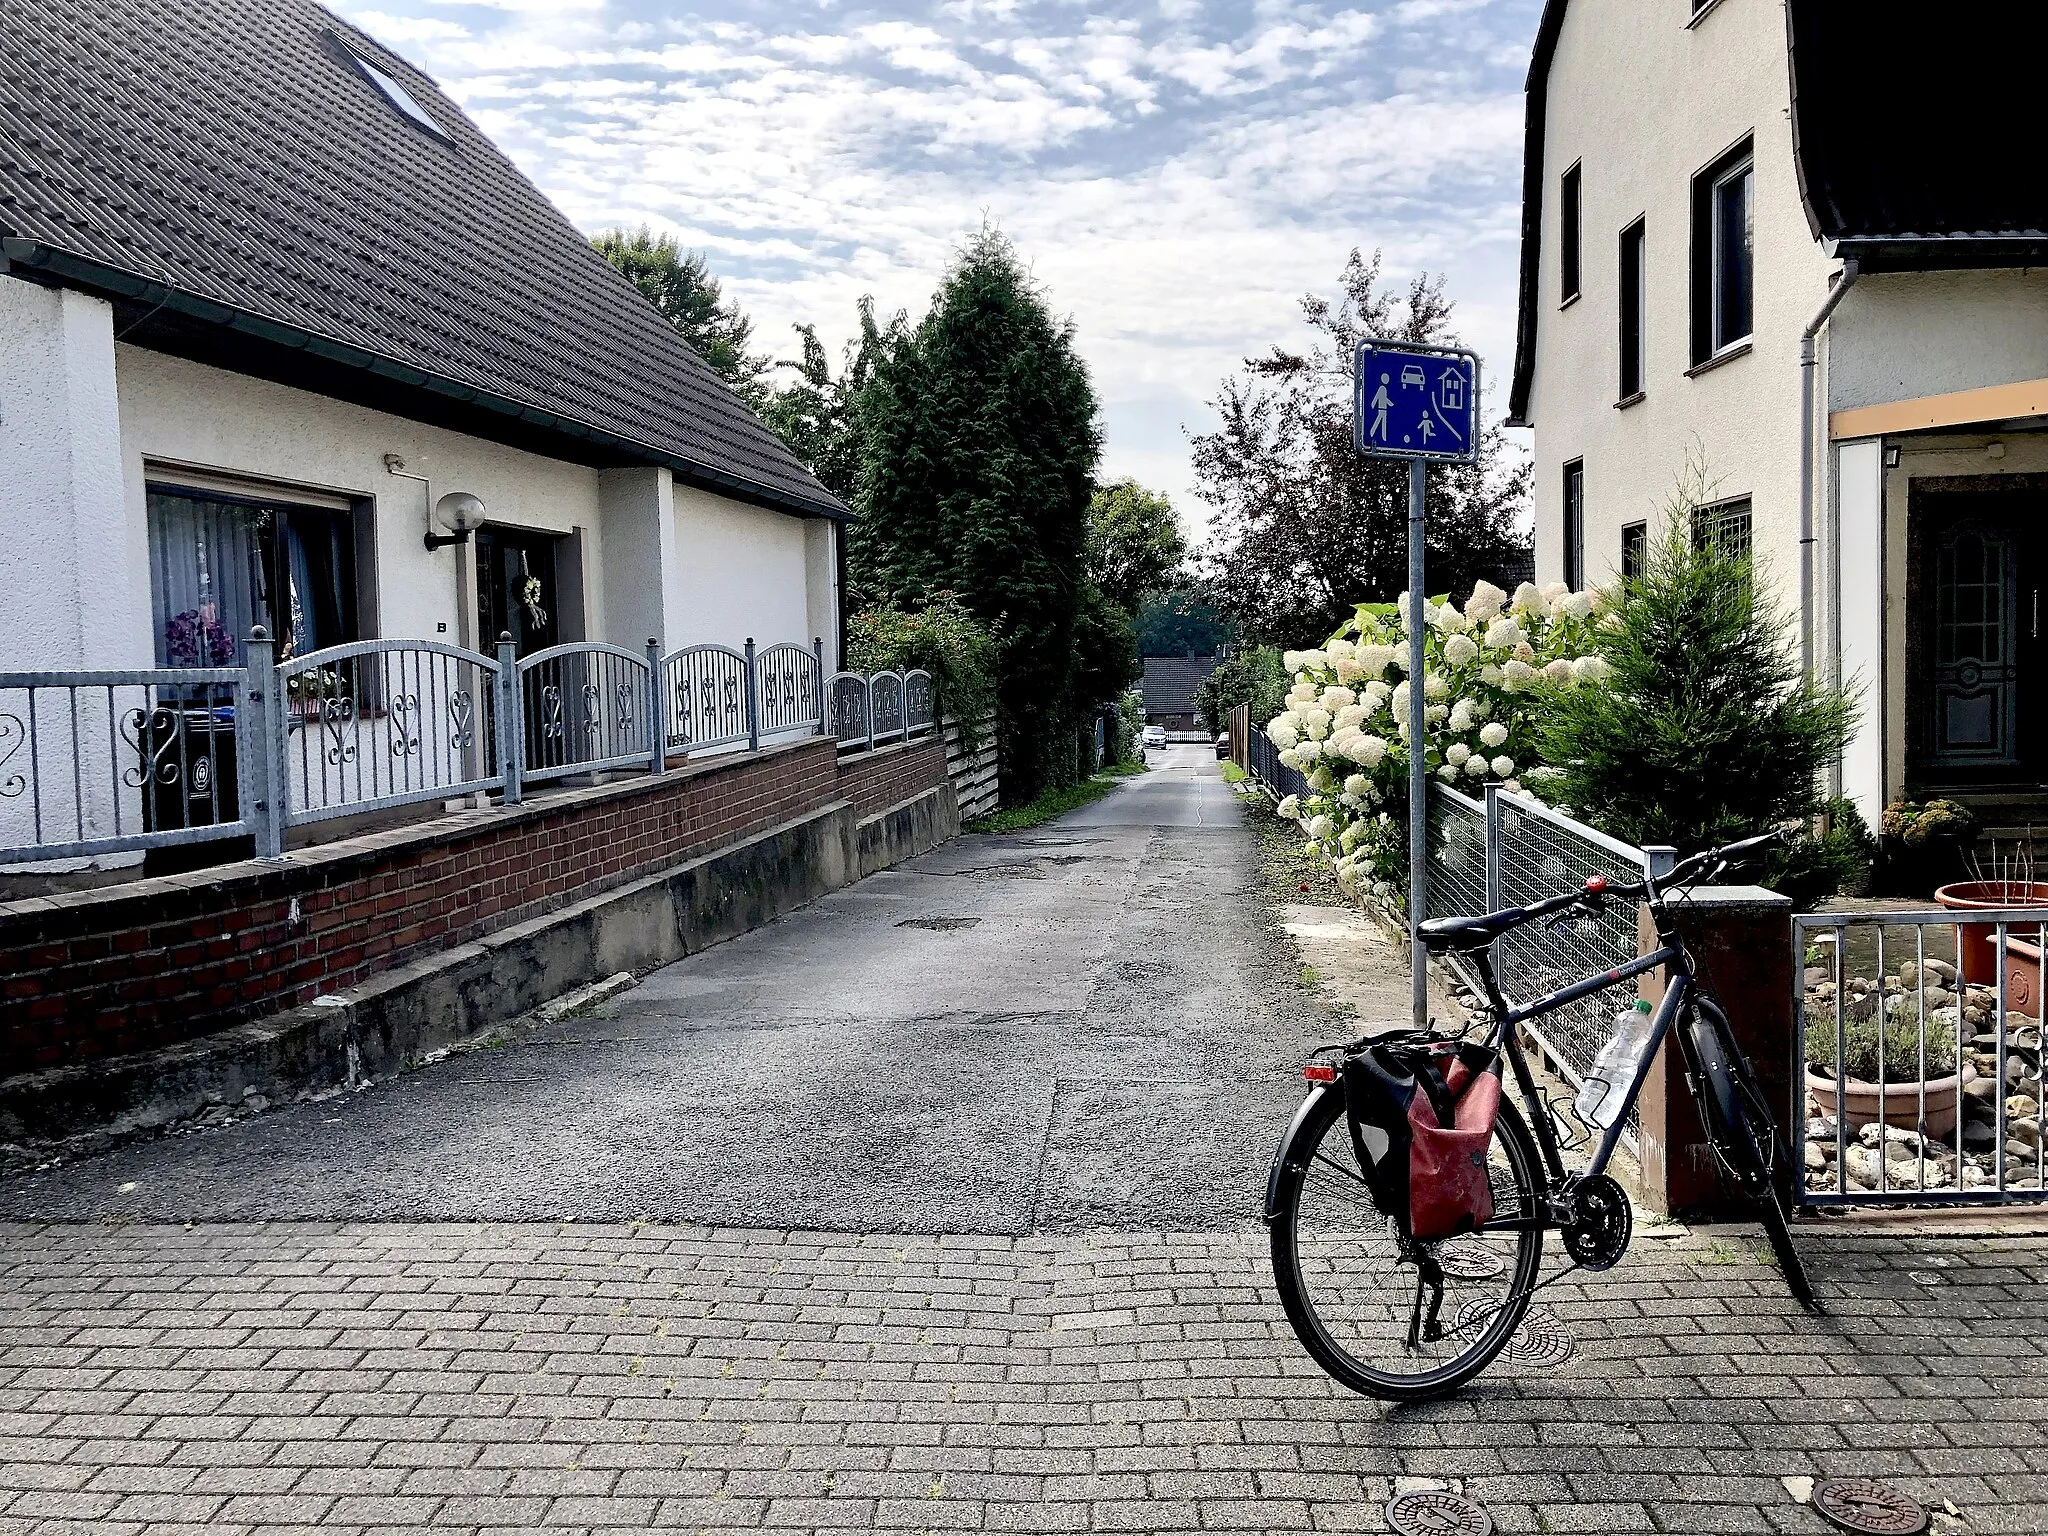 Photo showing: Street "Burbacher Weg" in the village of Burbach (Langenfeld (Rhineland), North Rhine-Westphalia, Germany).